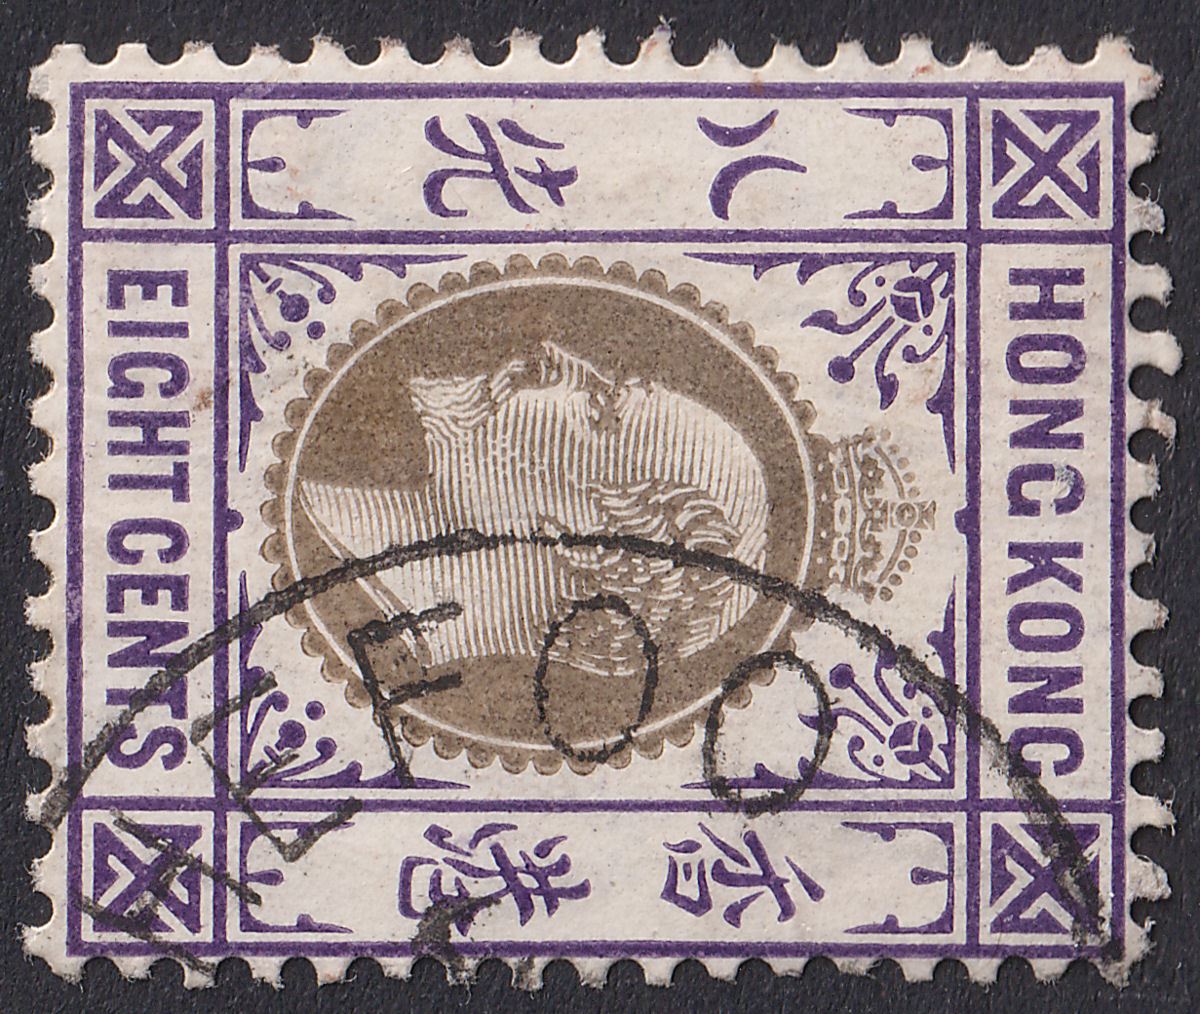 Hong Kong 1907 KEVII 8c Used with Rare CHEFOO Postmark Webb Type B SG Z276